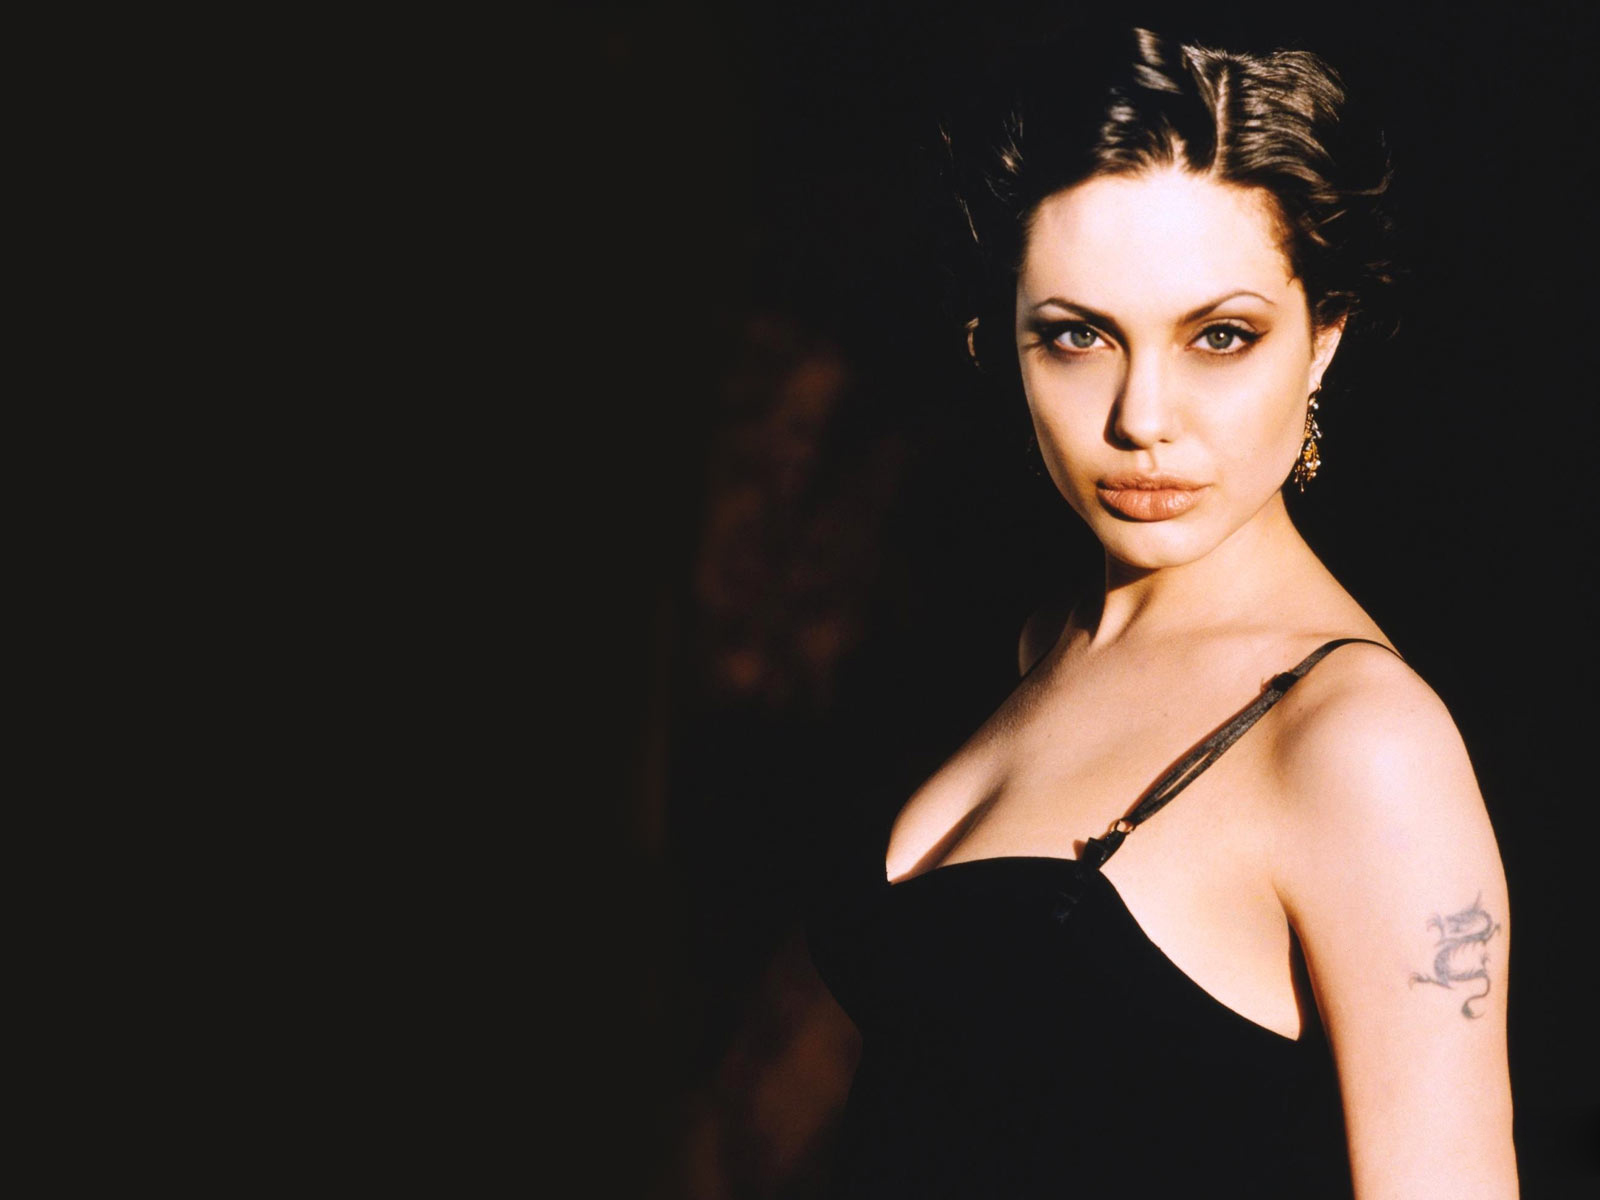 1920x1080202149 Angelina Jolie Hot Pics 1920x1080202149 Resolution Wallpaper Hd Celebrities 4k 